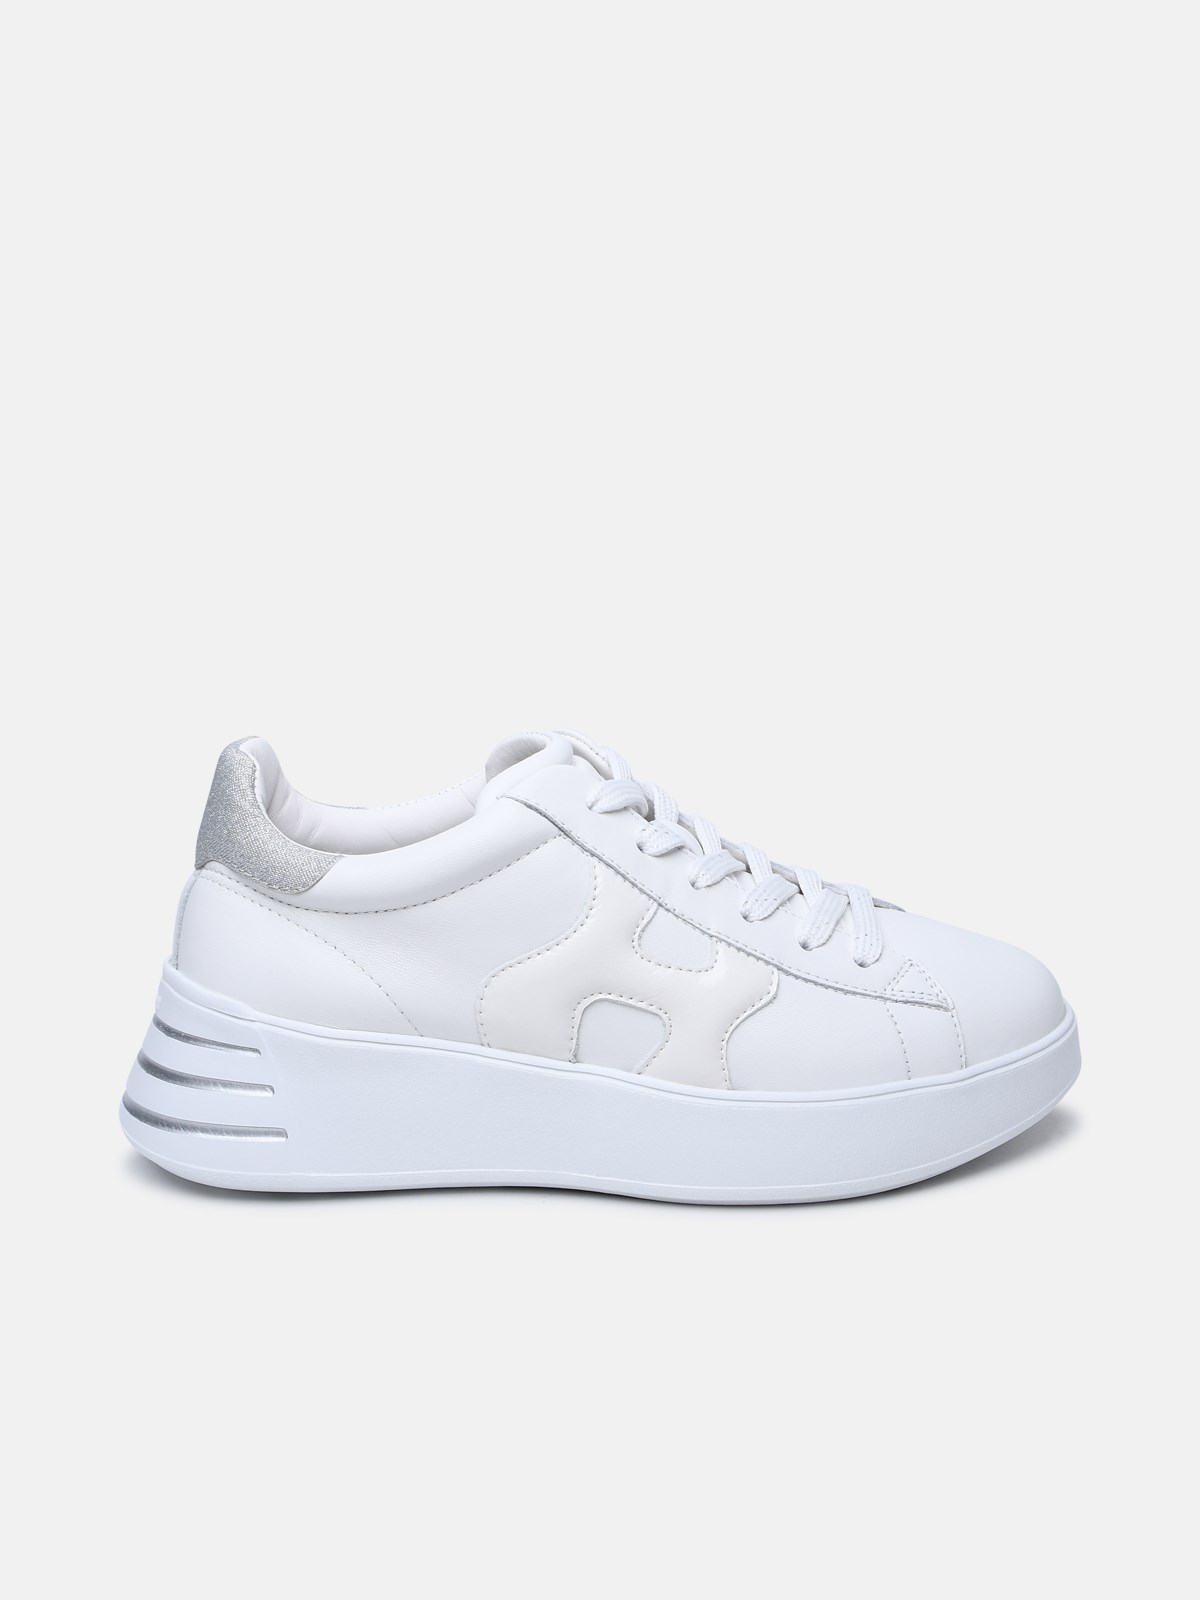 Hogan White Leather Rebel Sneakers